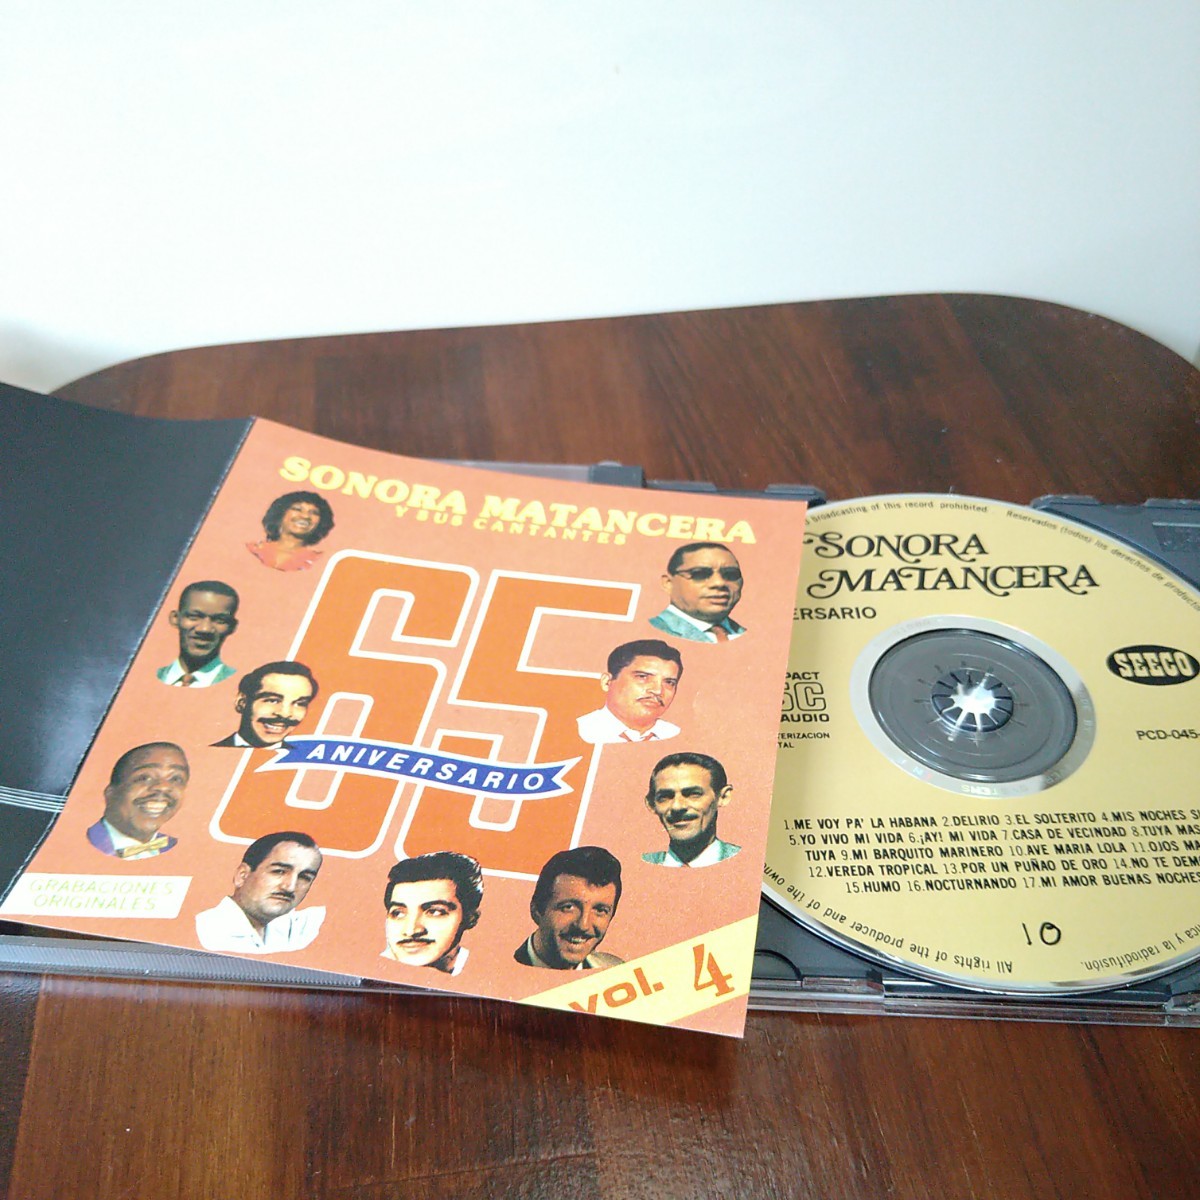  【CD】ソノーラ・マタンセーラ◆SONORA MATANCERA /65 Aniversario Vol.4◆キューバ_画像5